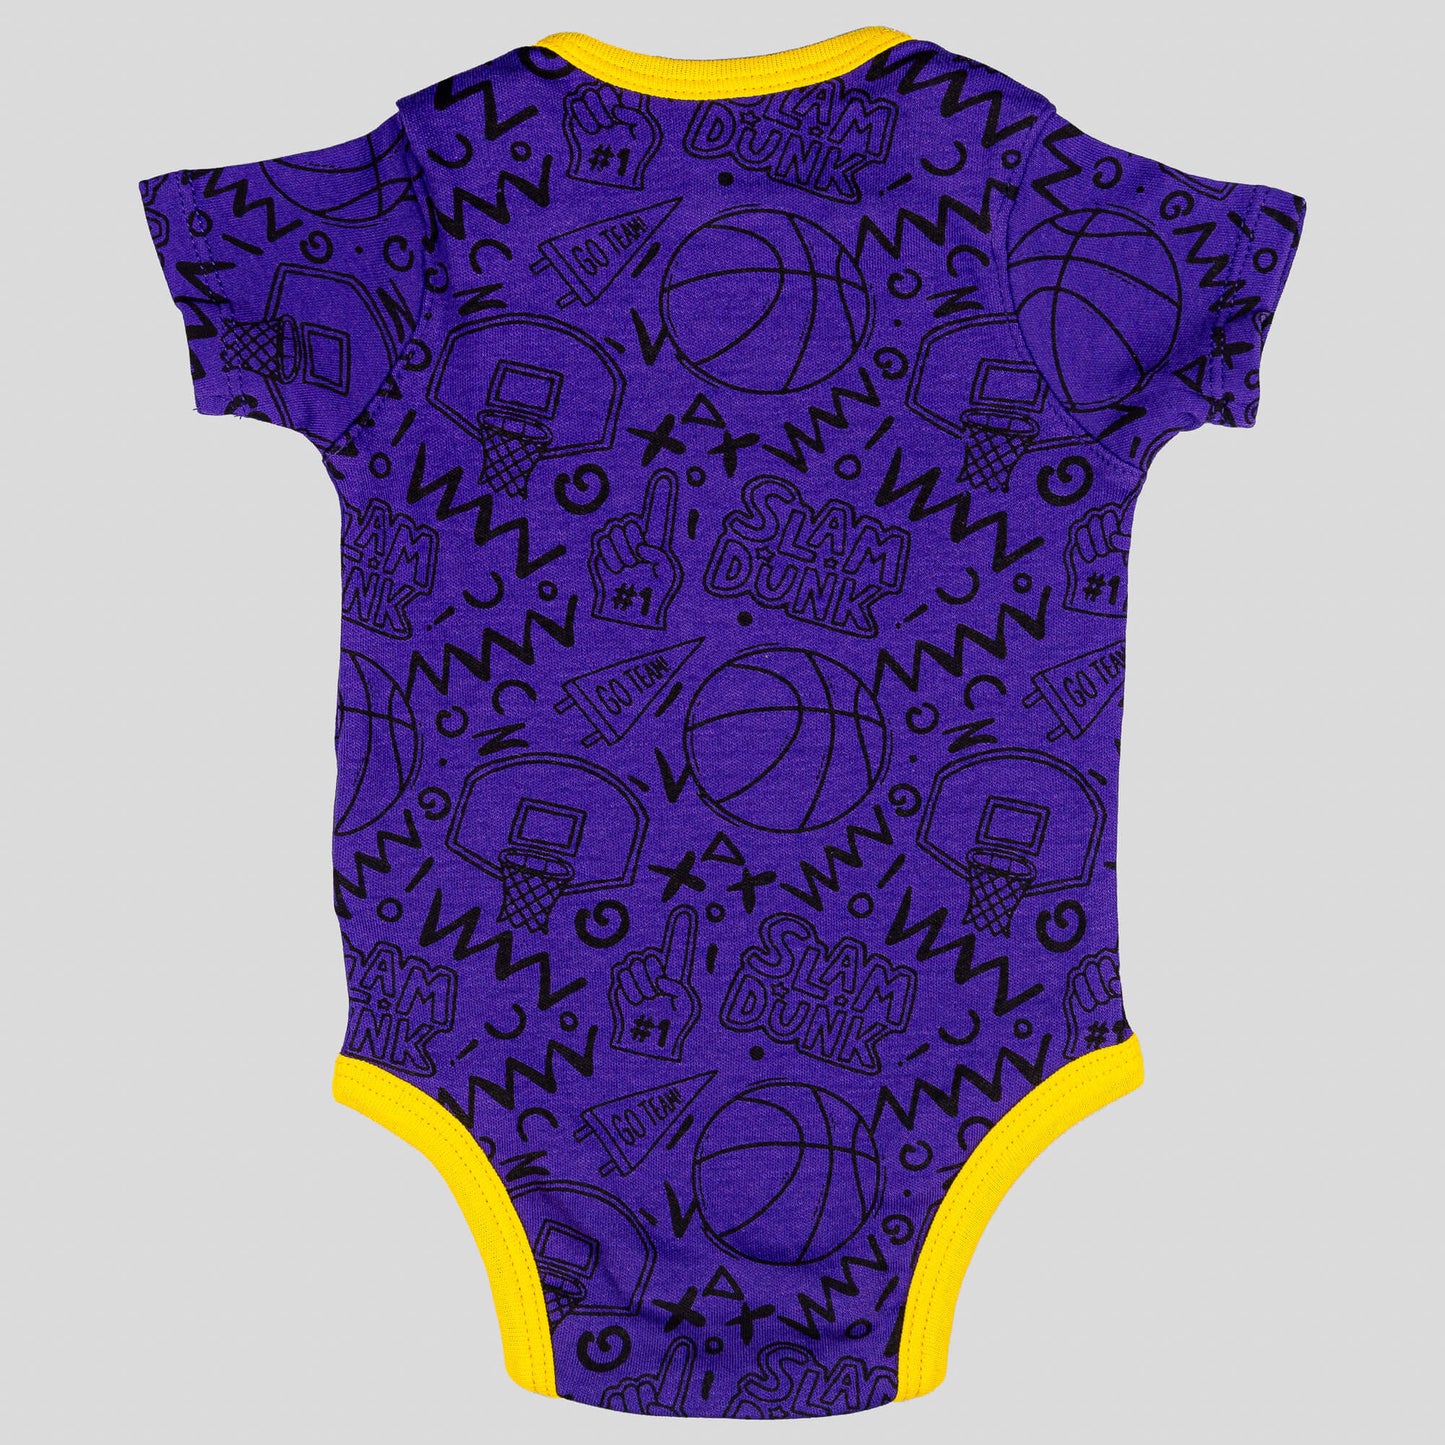 OUTER STUFF NBA SLAM DUNK 3PC SS CREEPER SET LOS ANGELES LAKERS Yellow/Purple/Grey